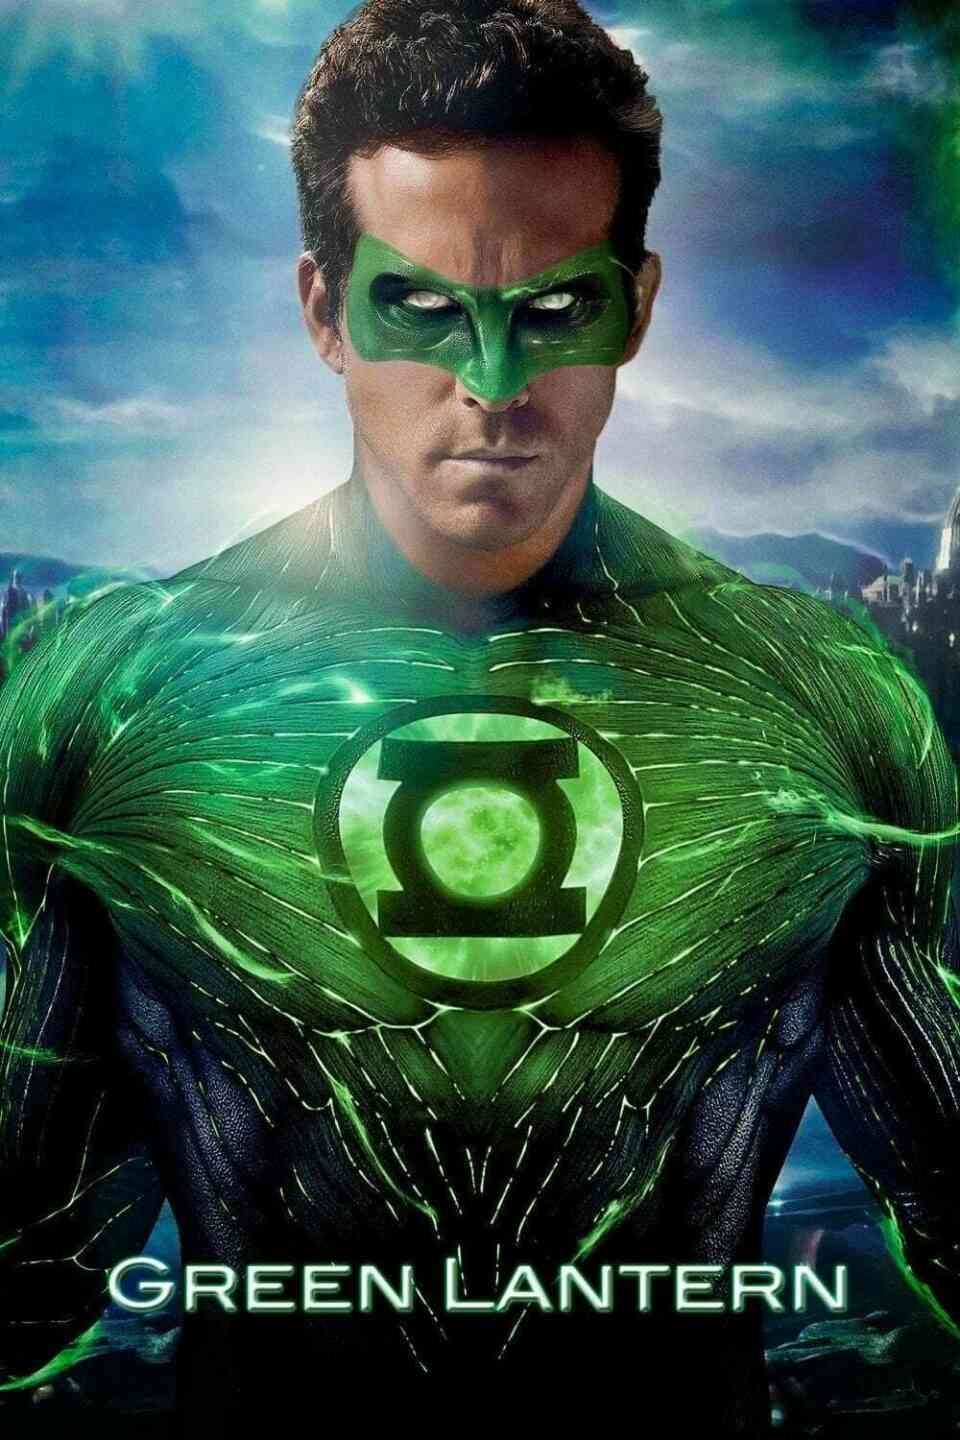 Read Green Lantern screenplay (poster)